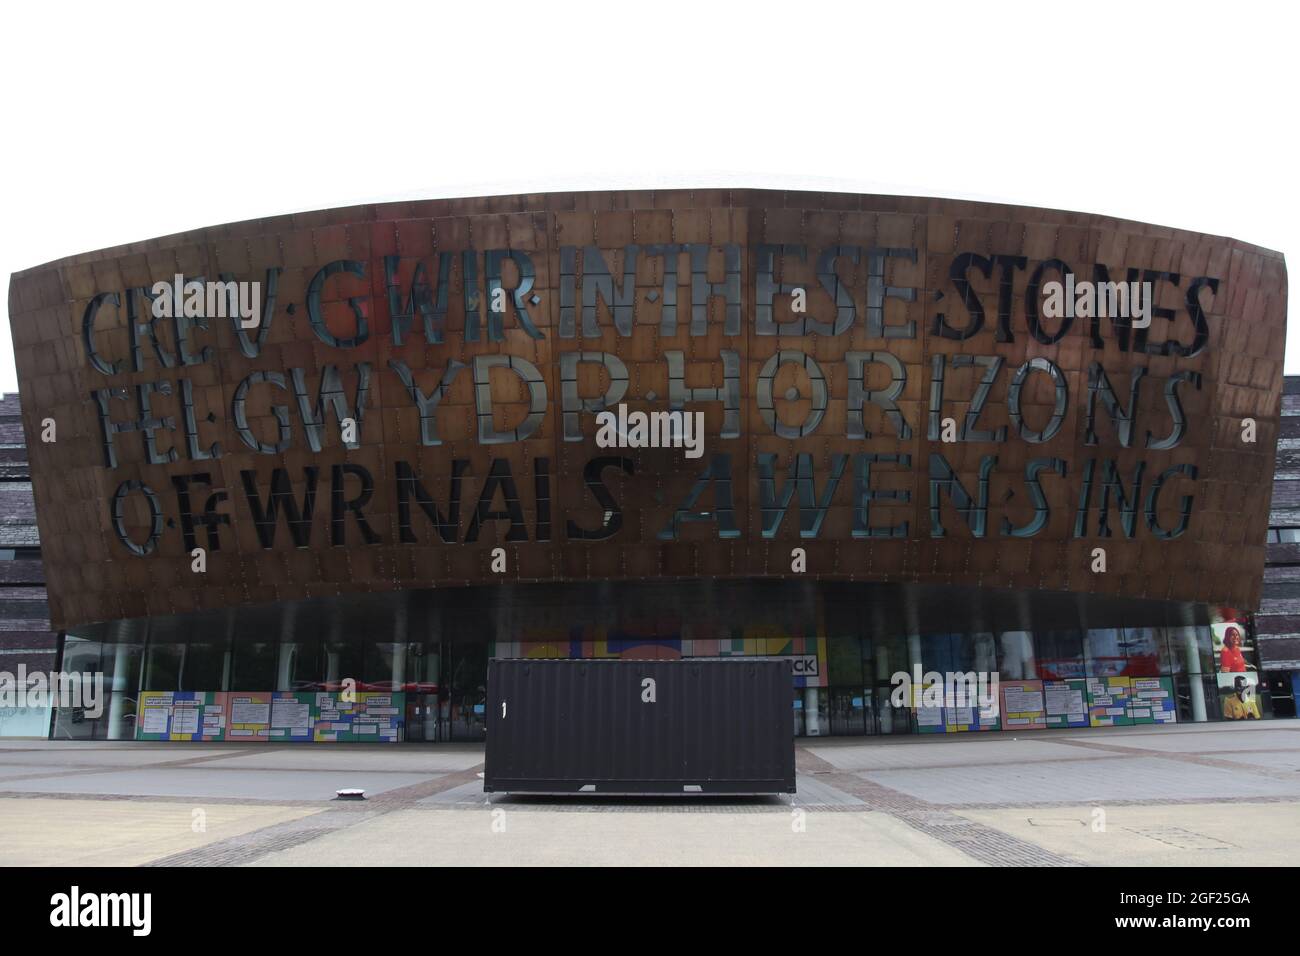 Wales Millennium Centre an arts centre, Mermaid Quay, Cardiff Bay, South Wales, UK, 2021, architect Jonathan Adams Stock Photo